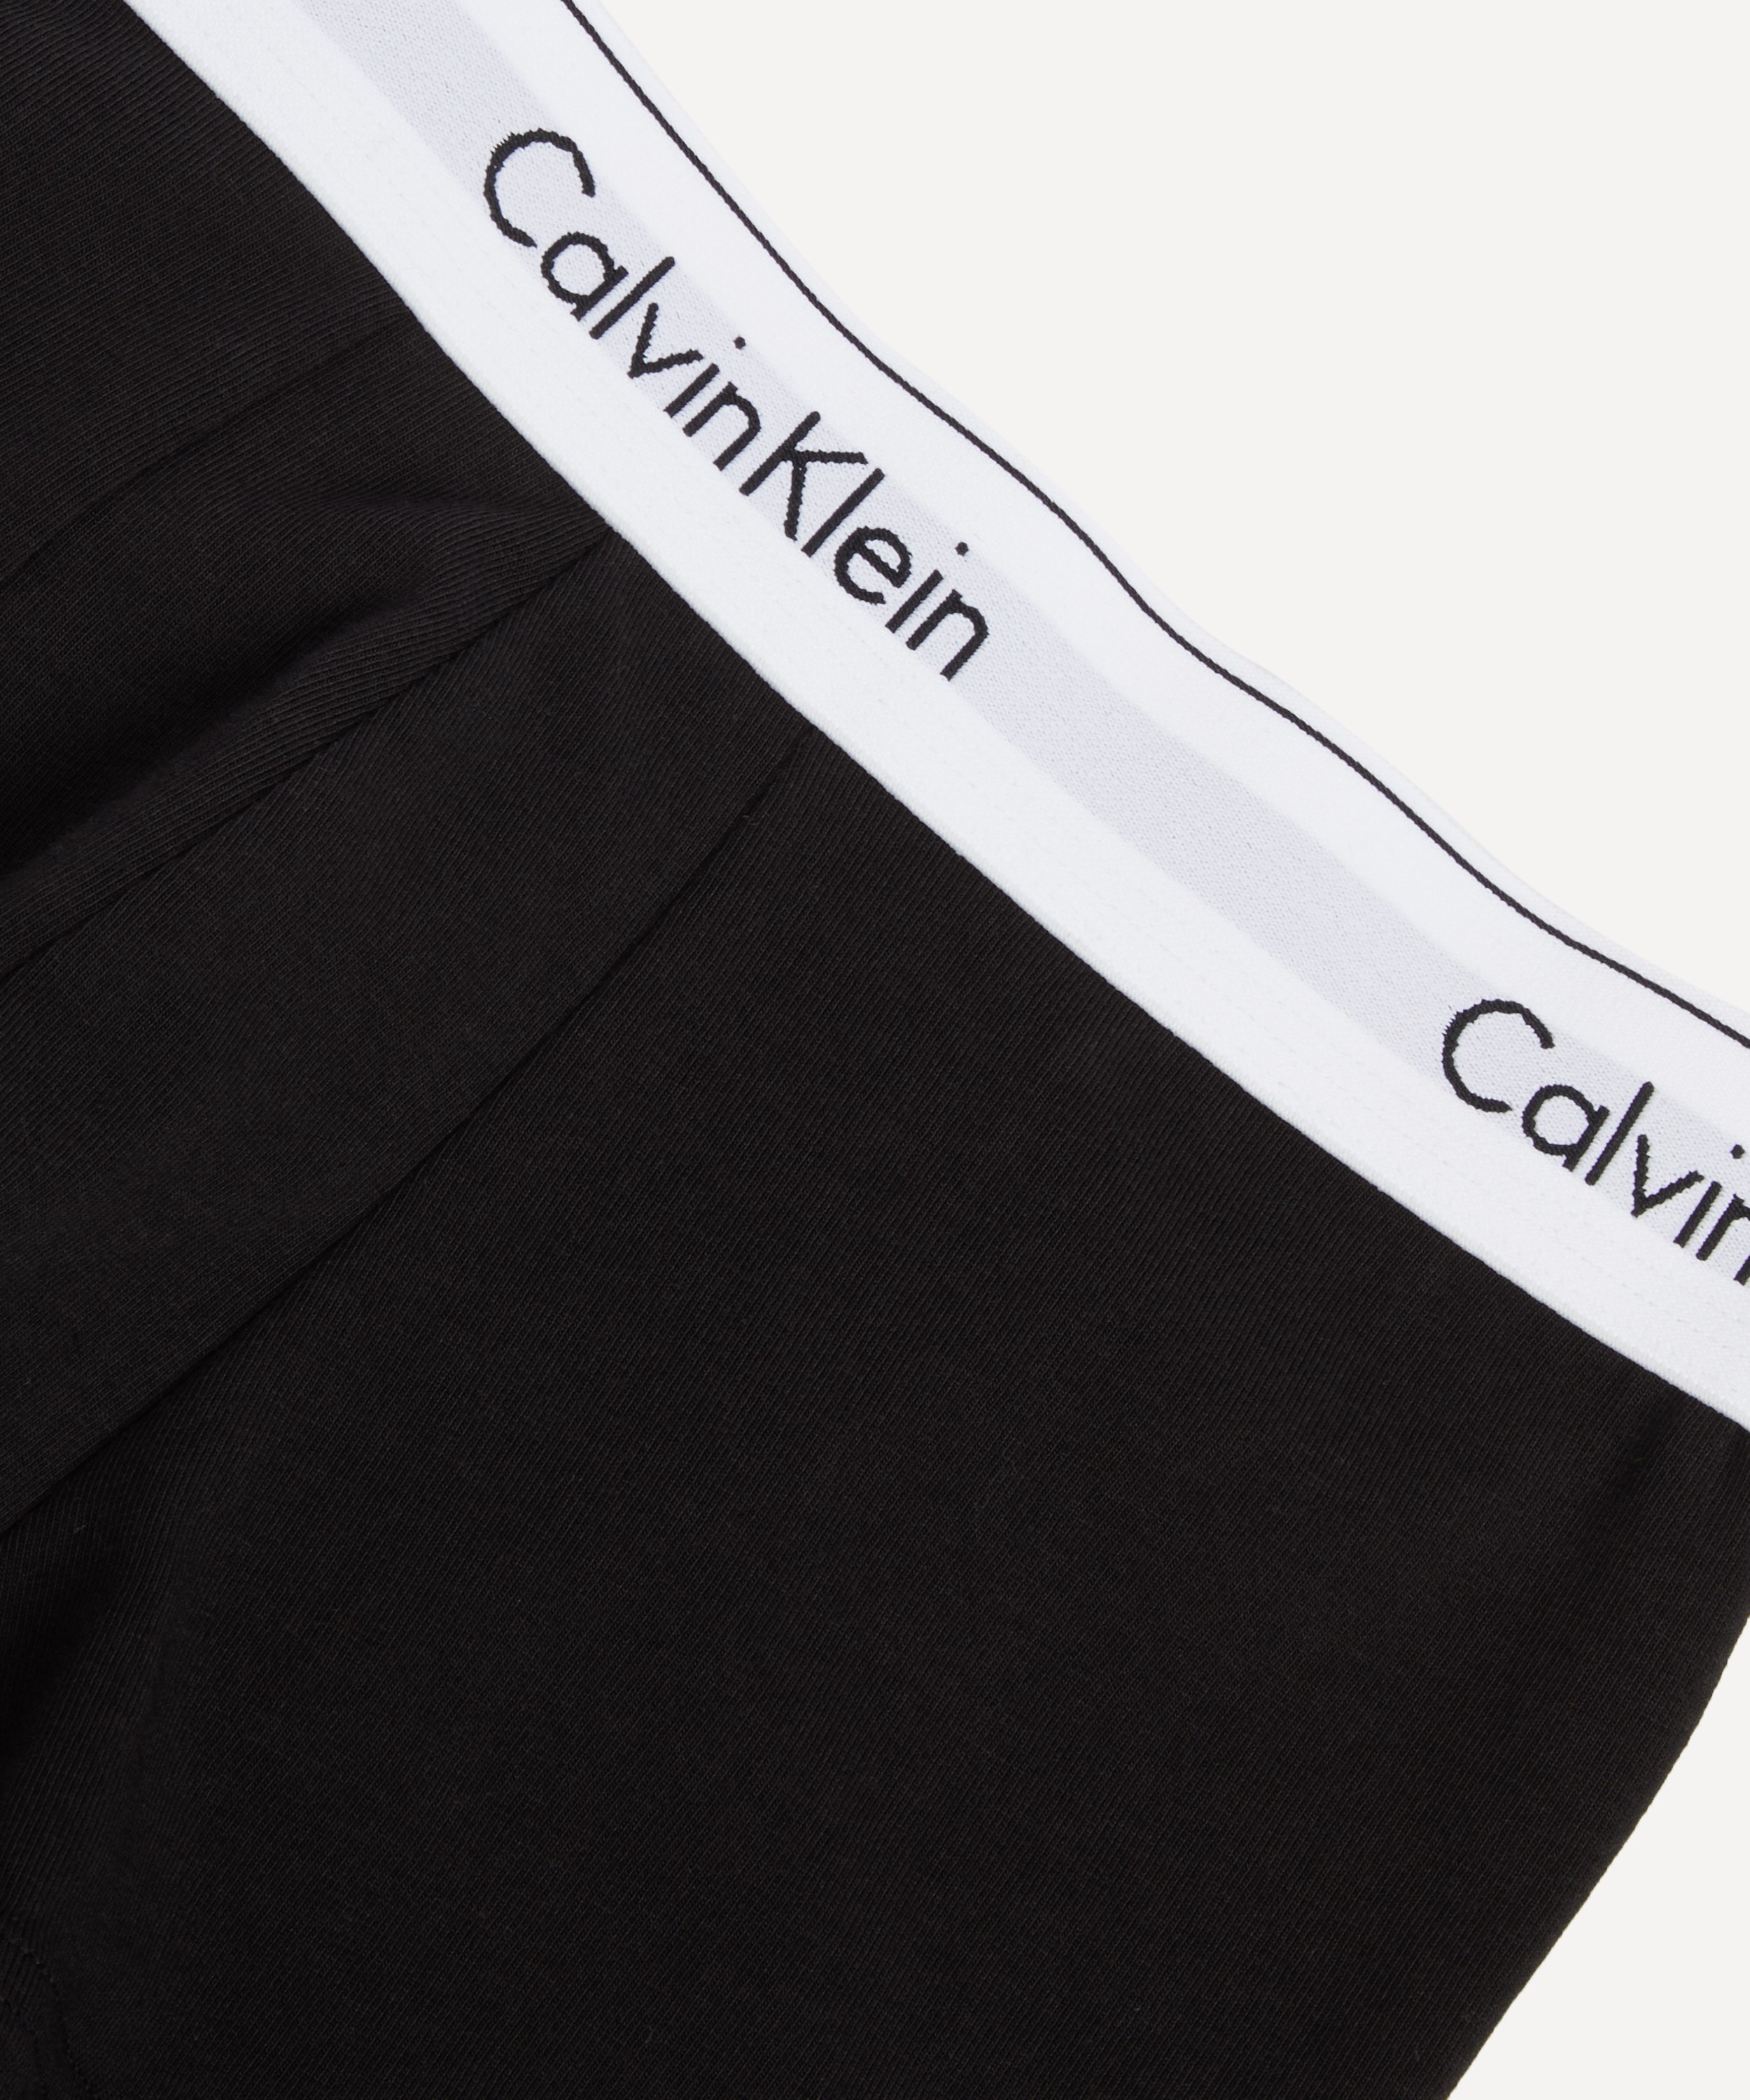 Calvin Klein Modern Cotton Trunks (Pack of 3)